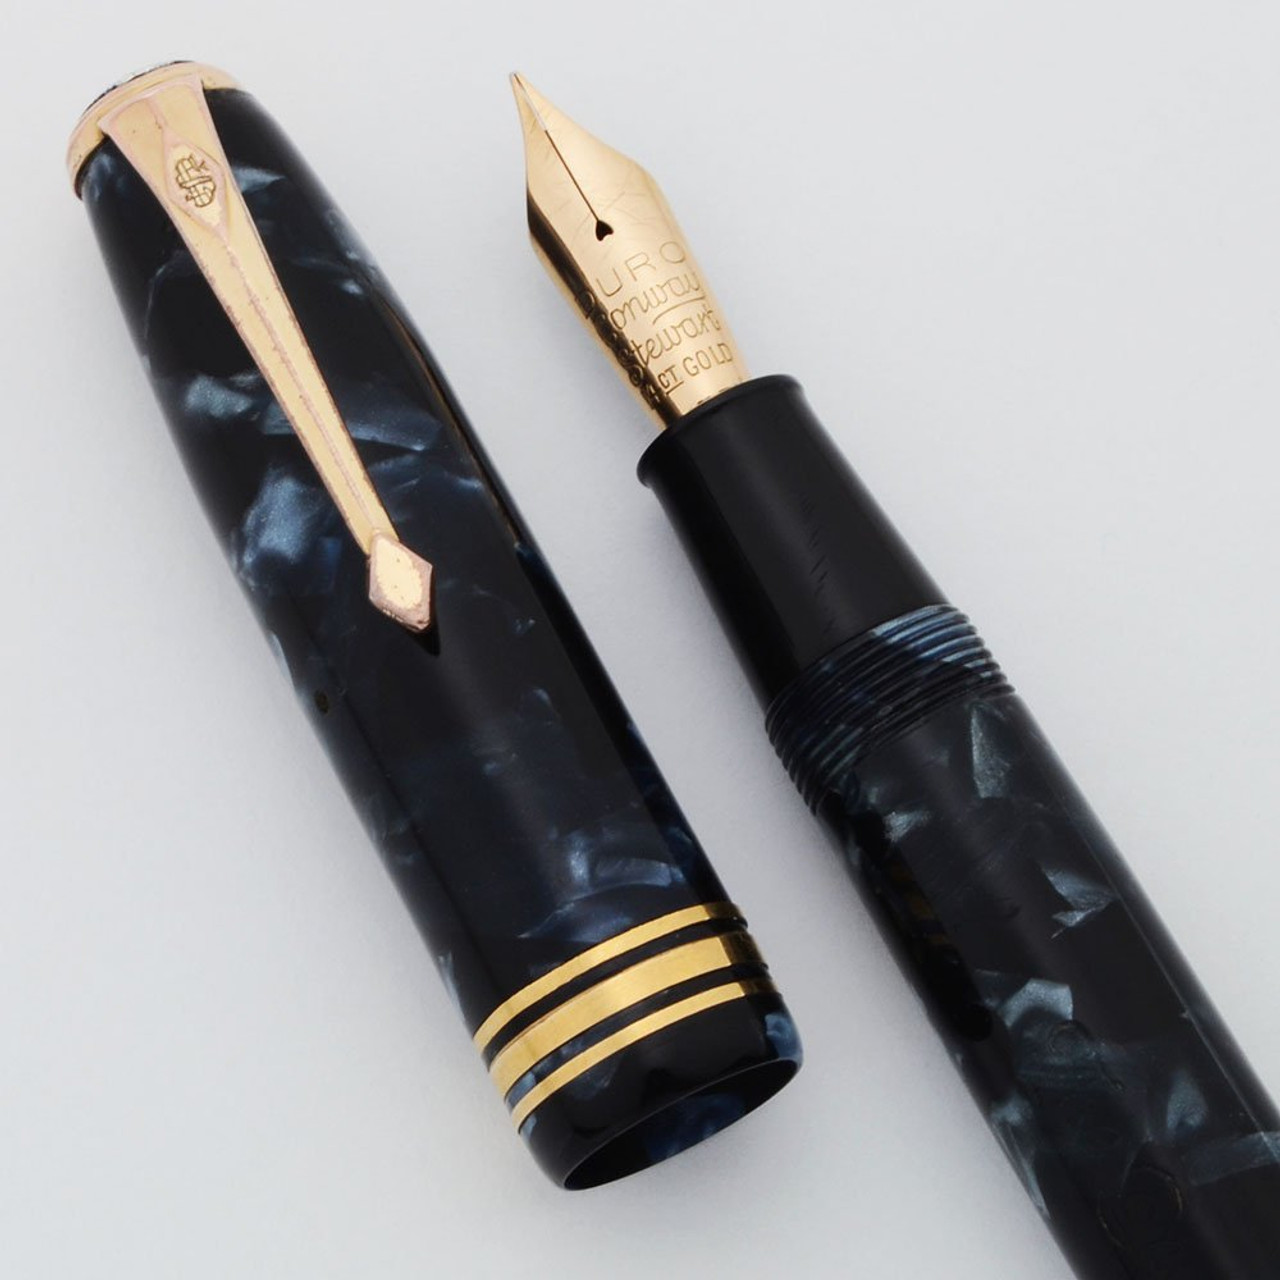 Conway Stewart 58 Fountain Pen - Marbled Blue, Flexible 14k Gold Nib (Very Nice, Restored)